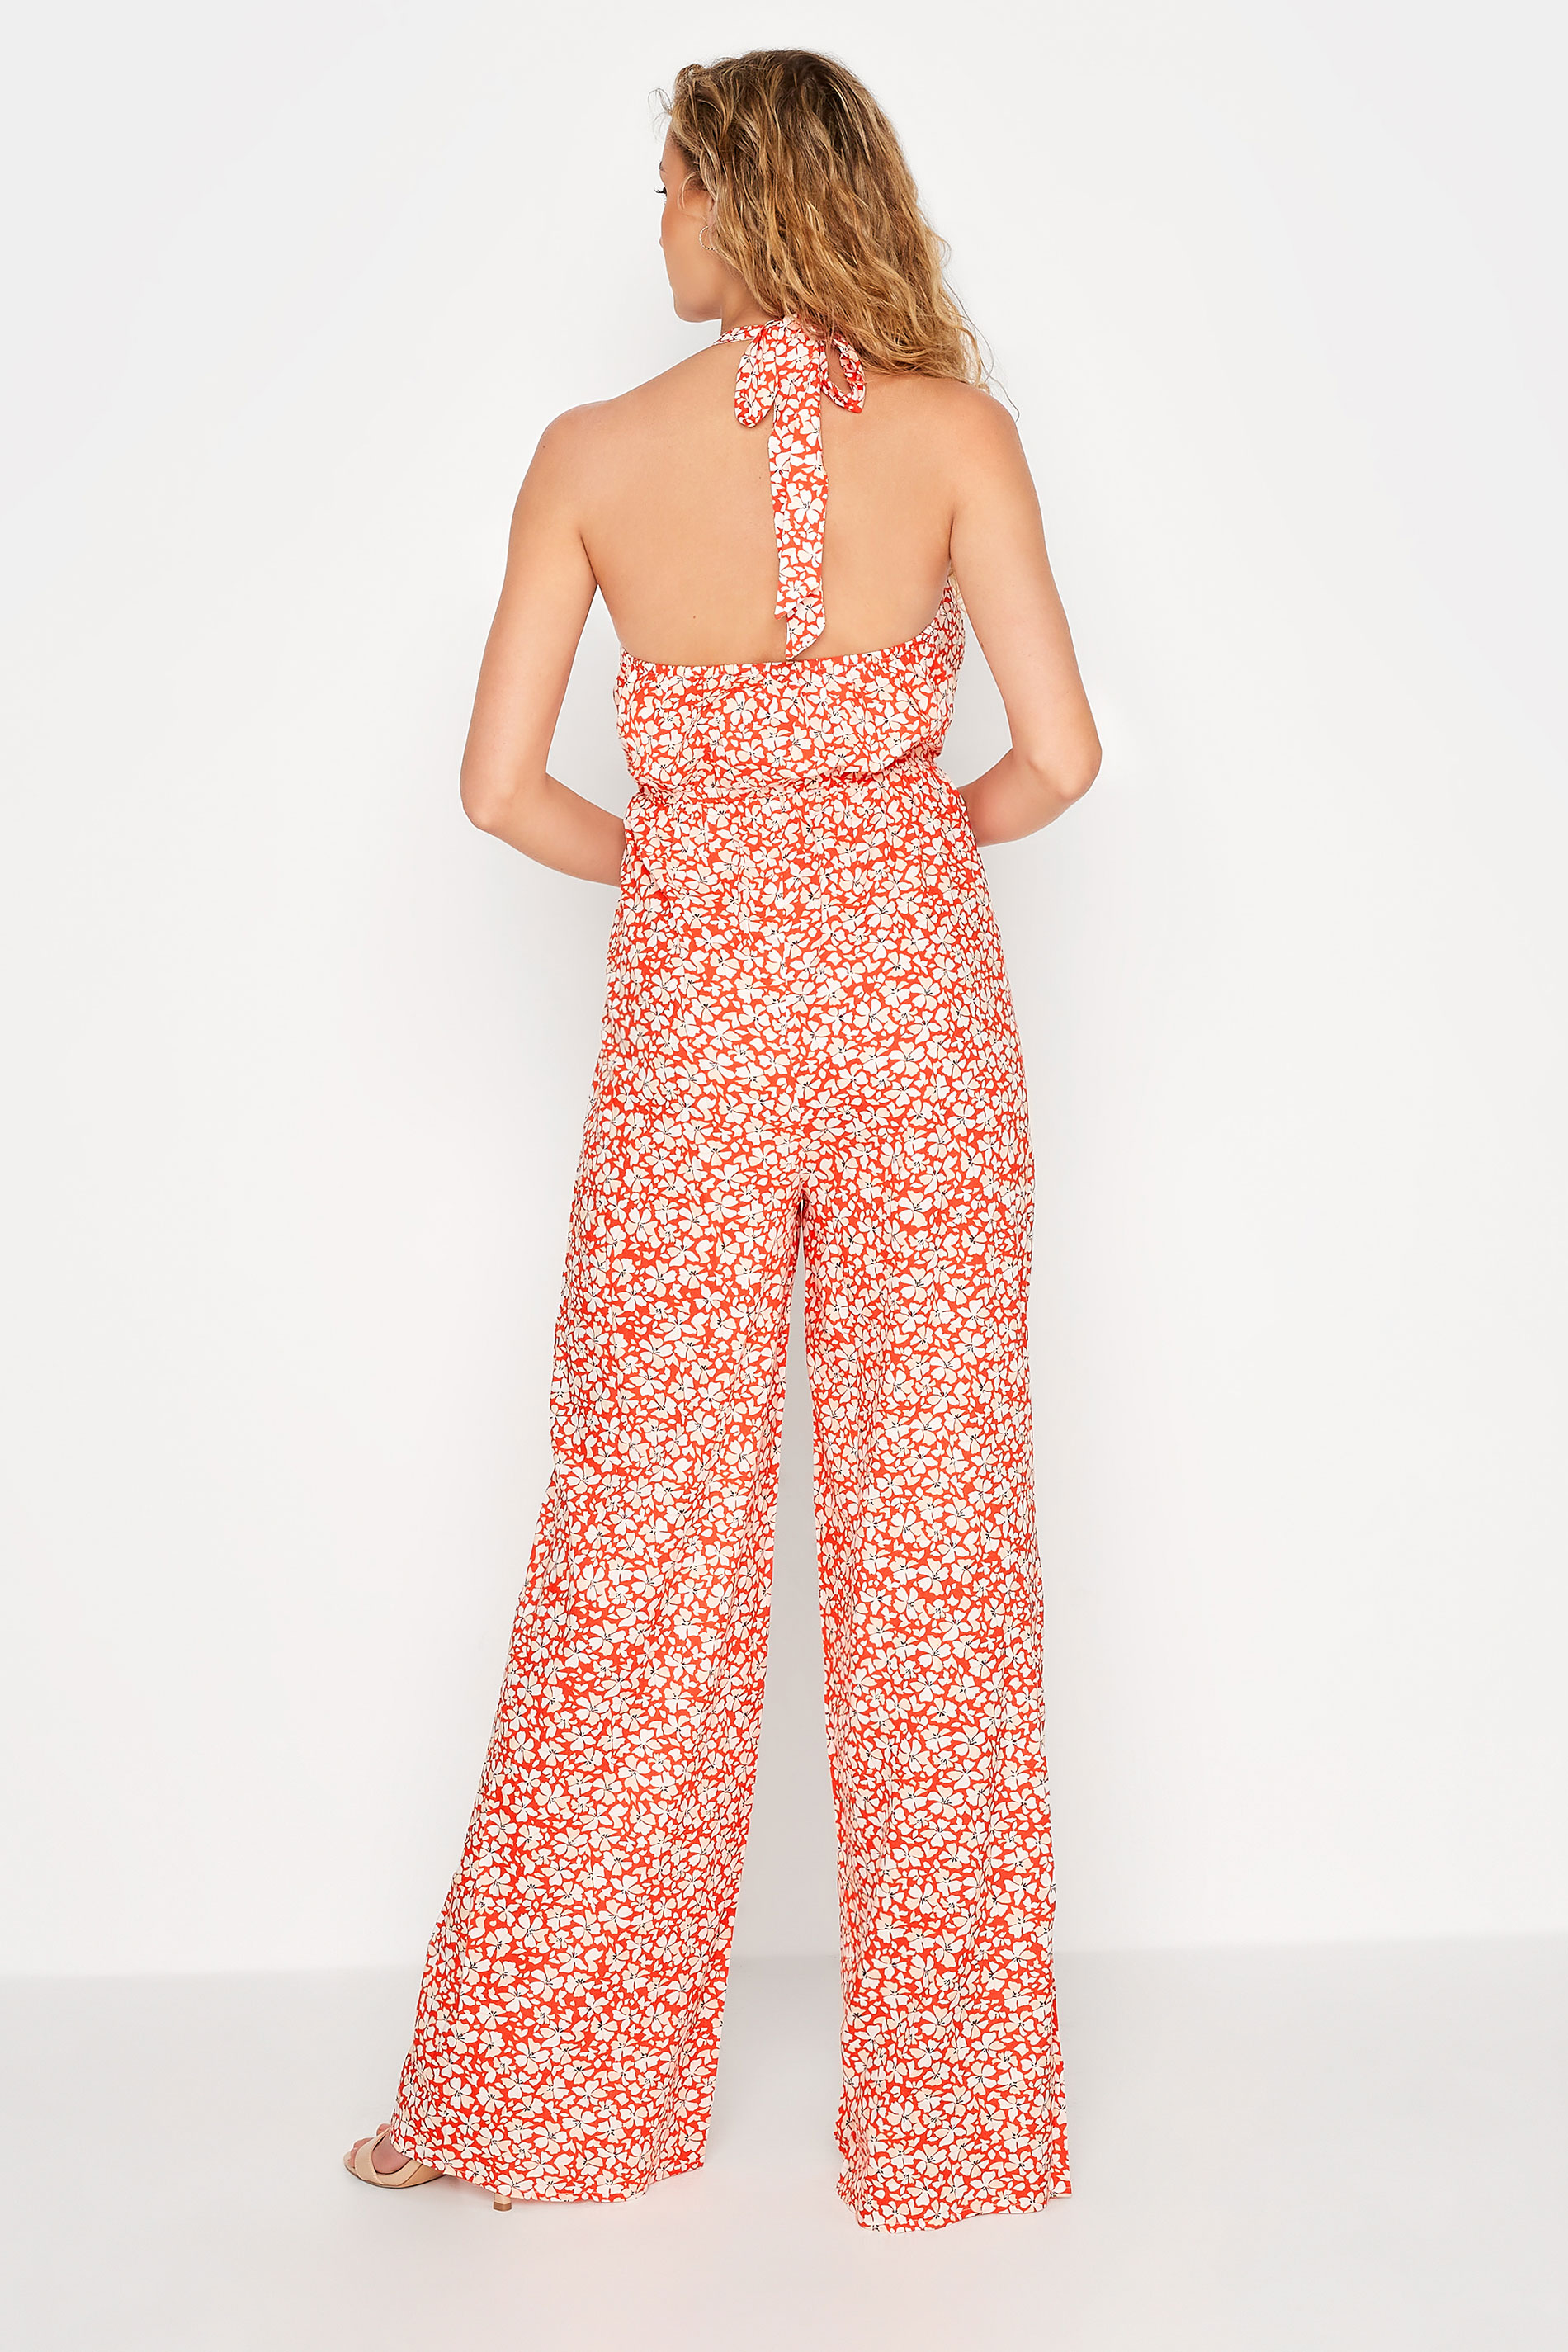 LTS Tall Women's Orange Floral Print Halter Neck Jumpsuit | Long Tall Sally 3